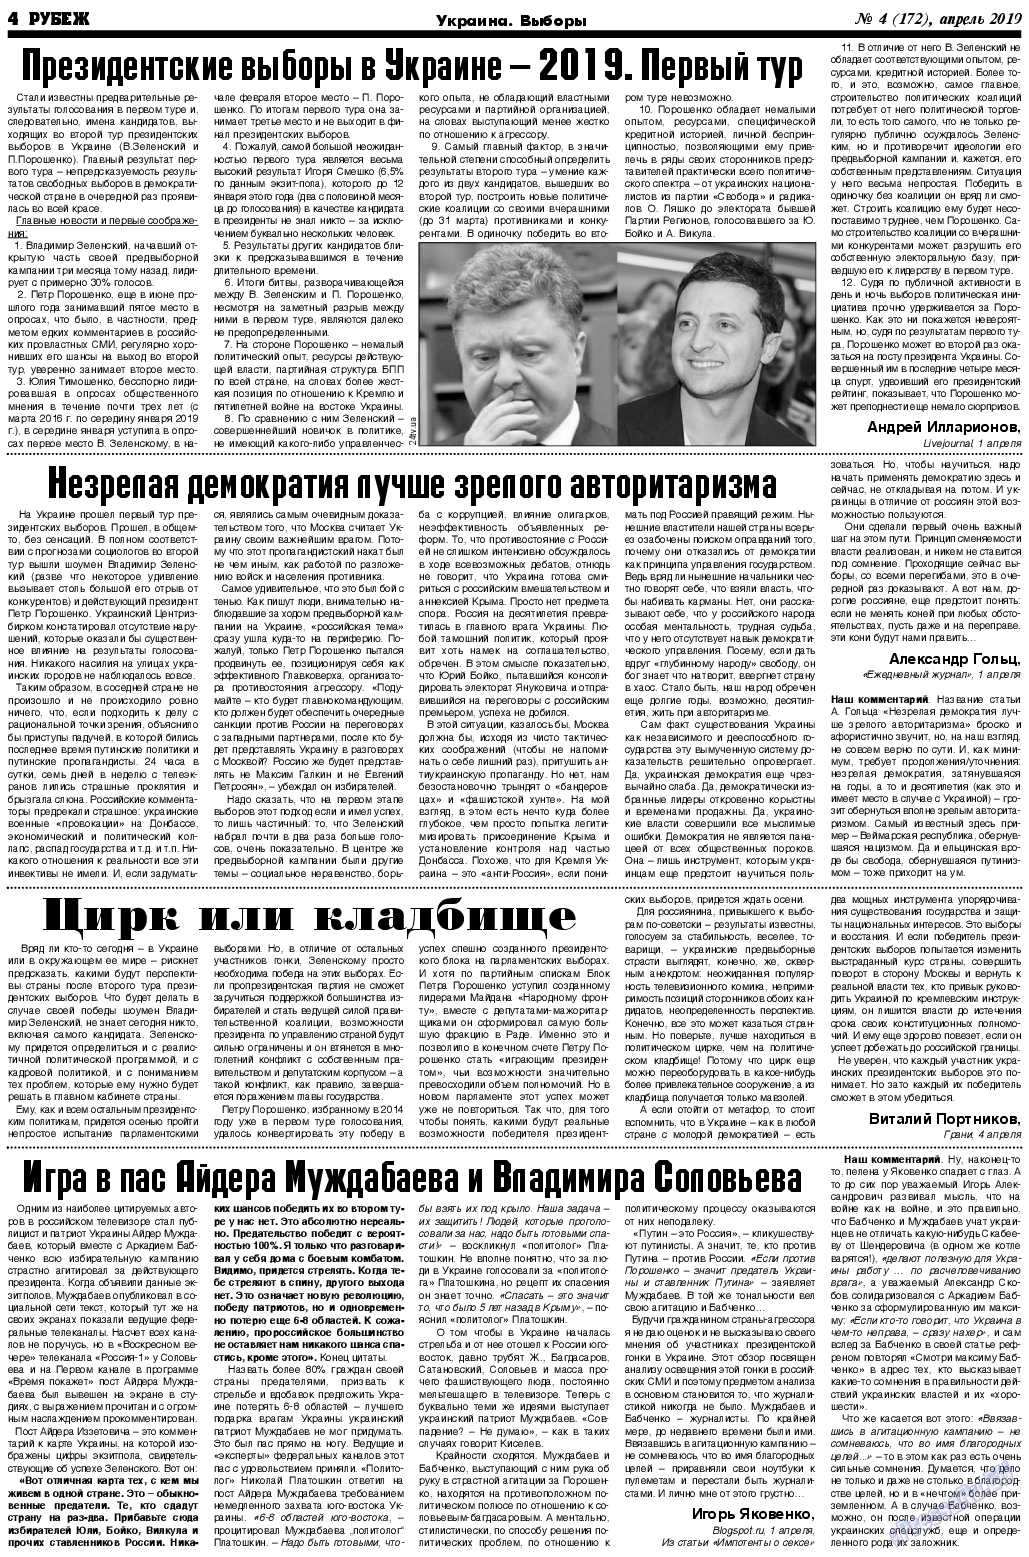 Рубеж, газета. 2019 №4 стр.4